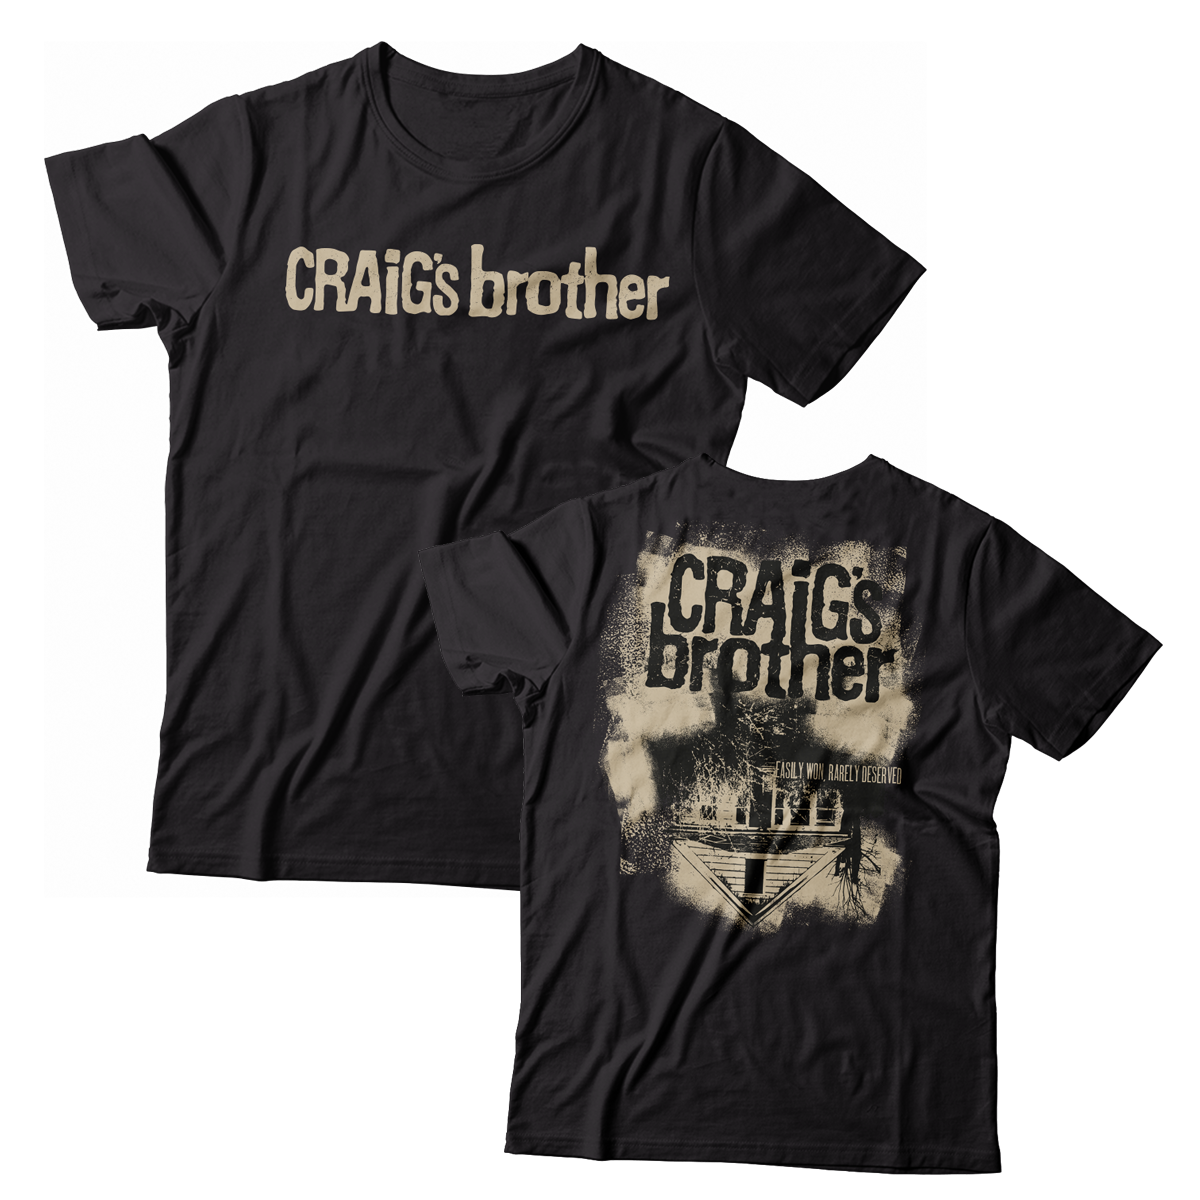 CRAIG'S BROTHER - "Easily Won, Rarely Deserved" (Black) (T-Shirt)